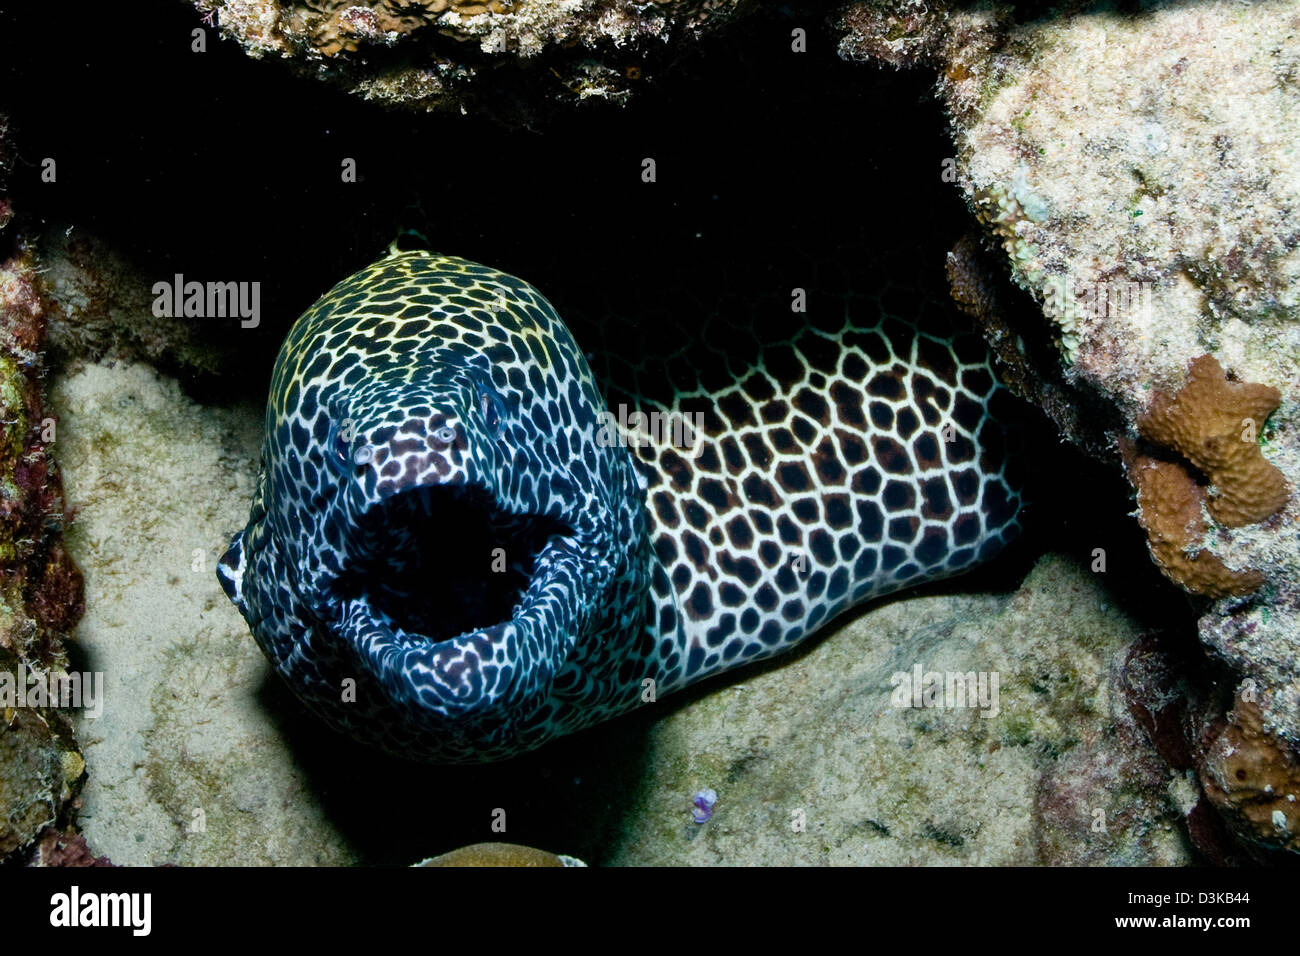 Black and white honeycomb moray eel, Australia. Stock Photo